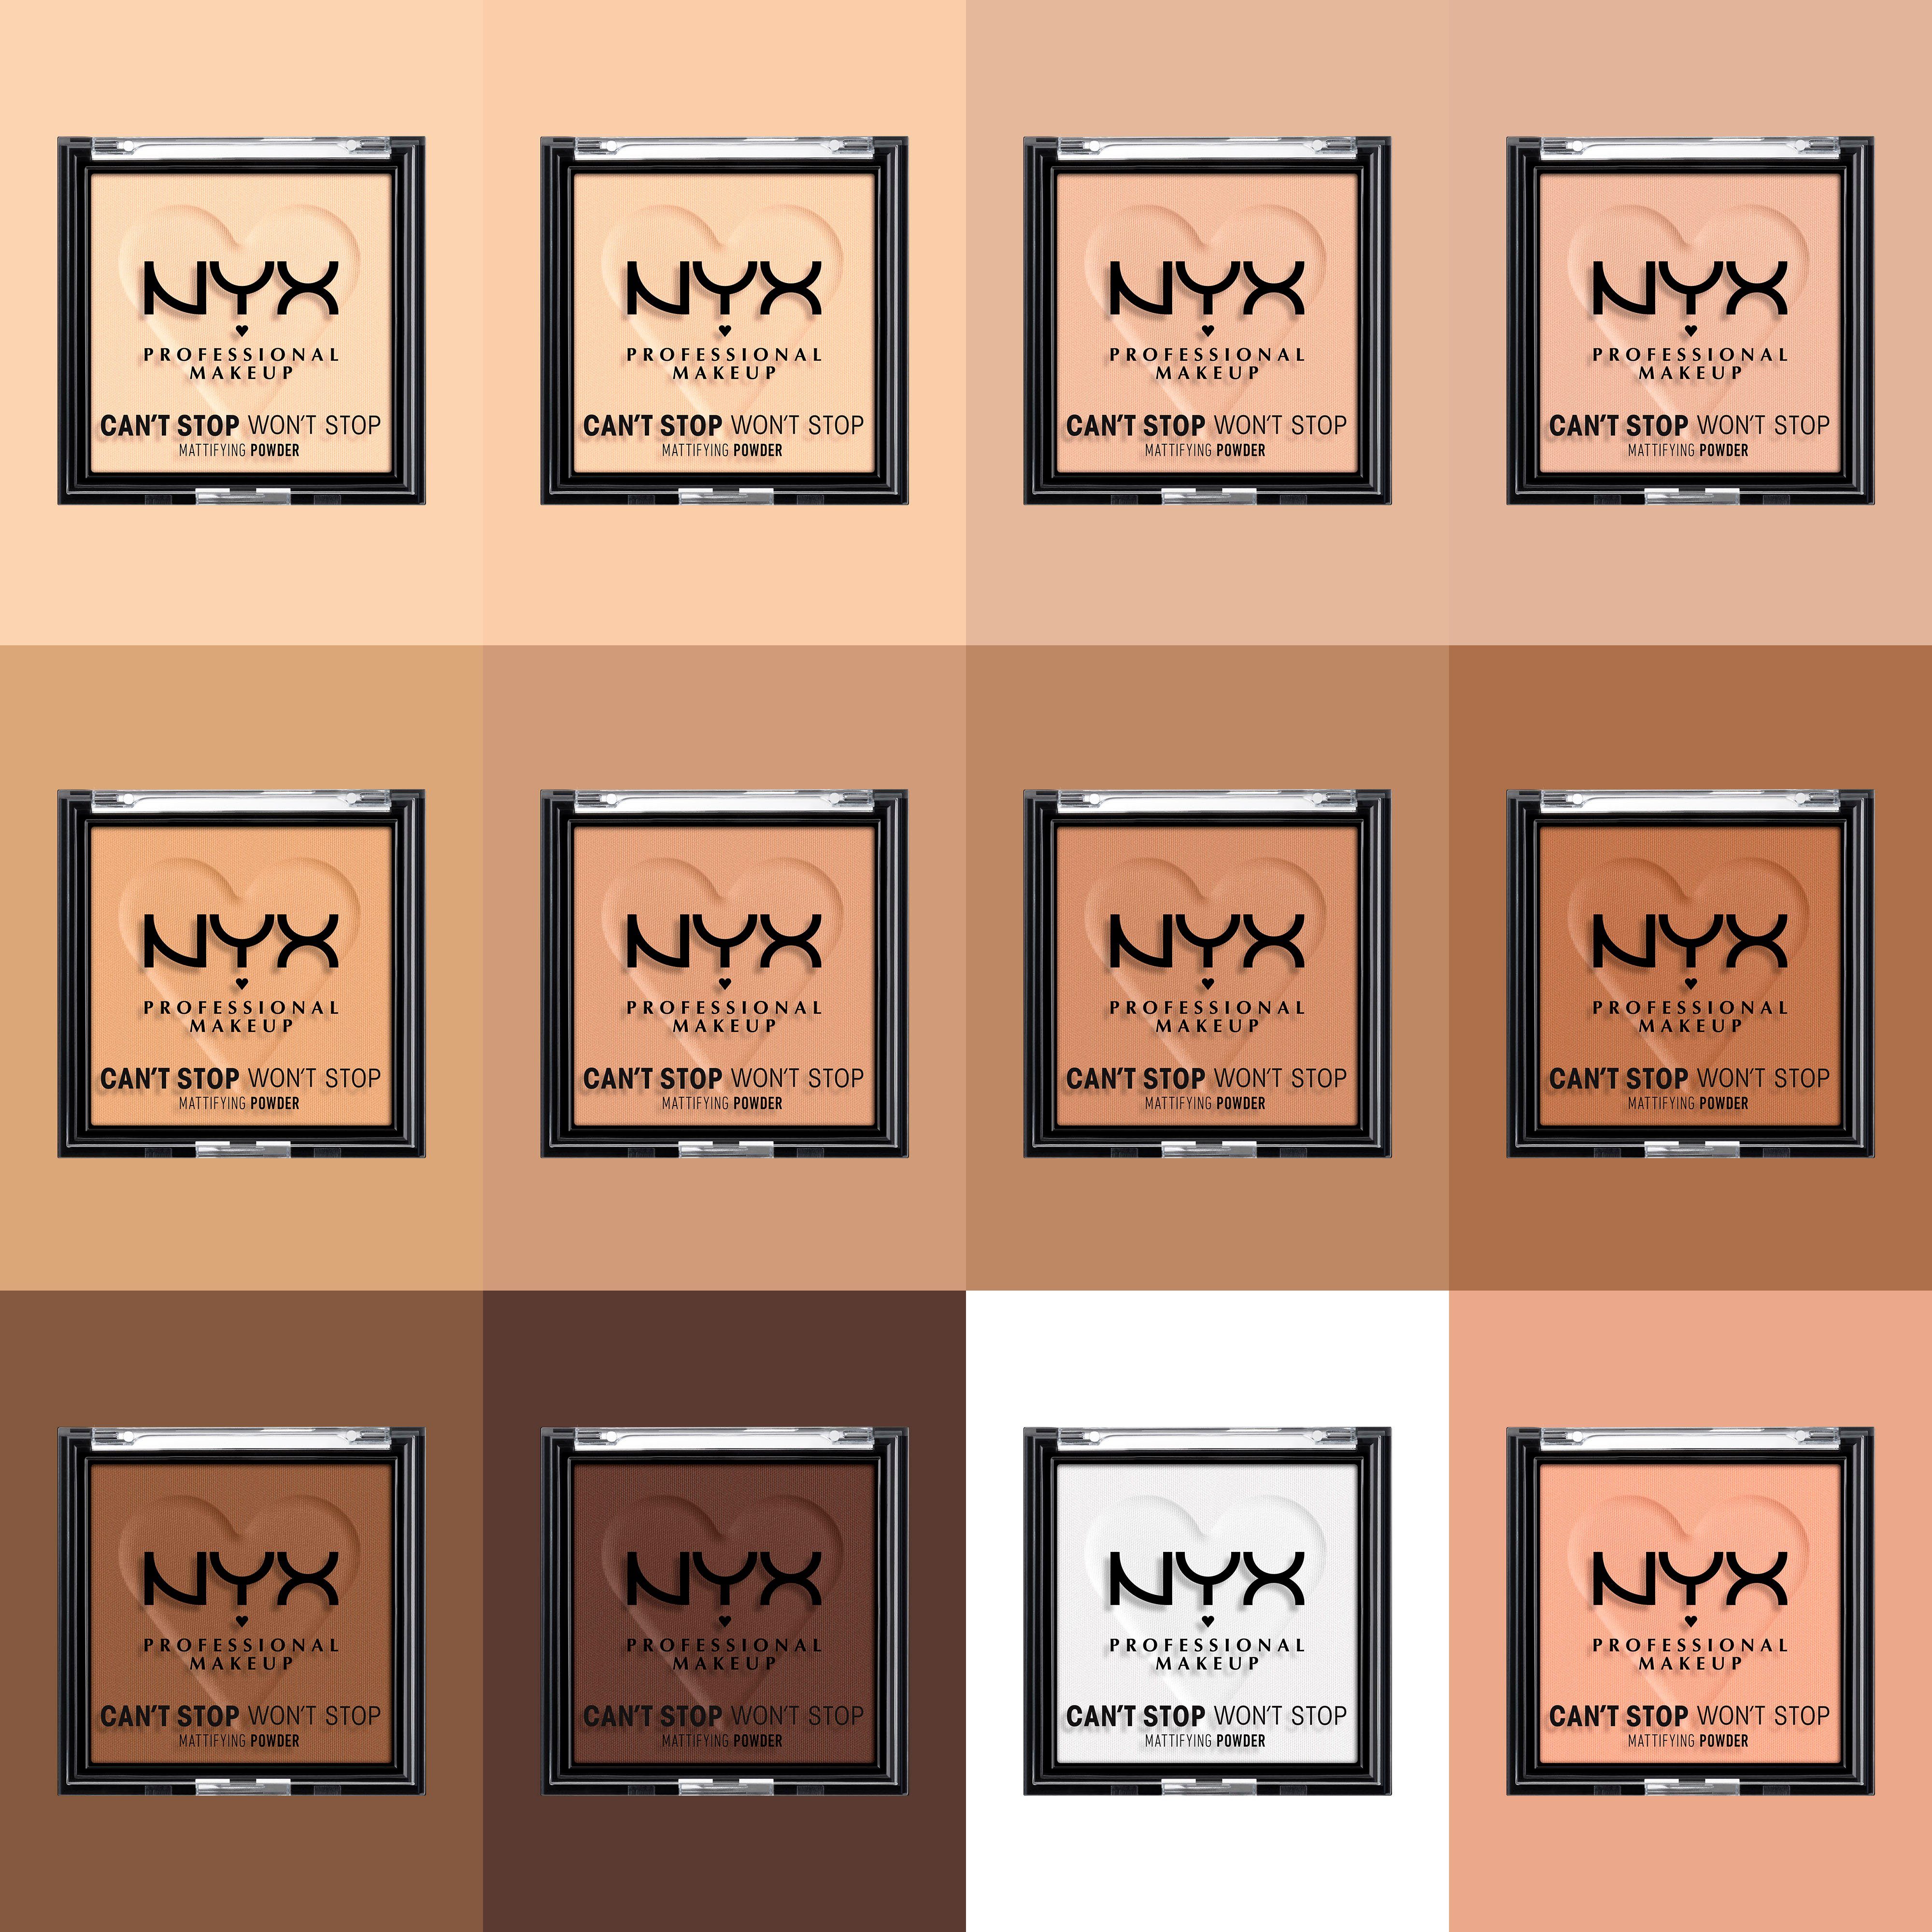 NYX Puder Professional Makeup CSWS Powder Mattifying Fair 01